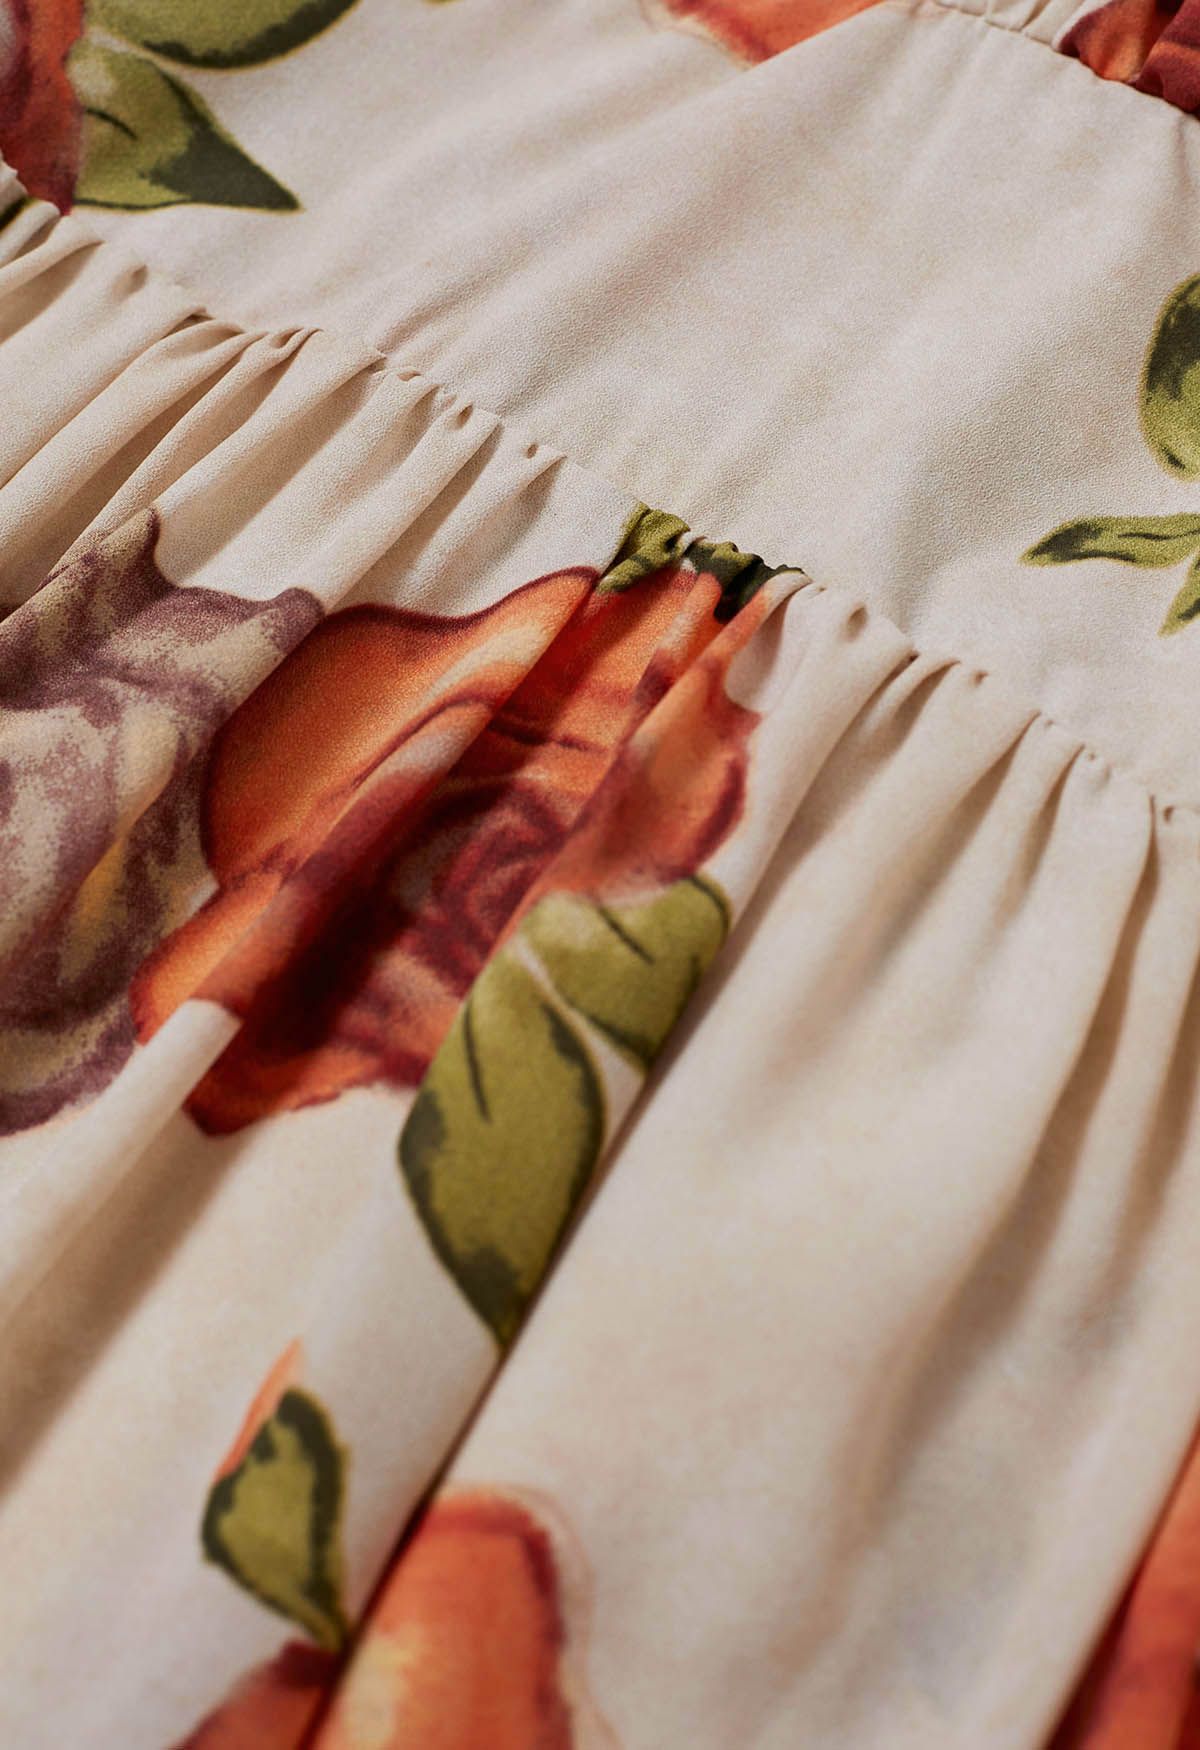 Vintage Rose Print Wrap Midi Dress